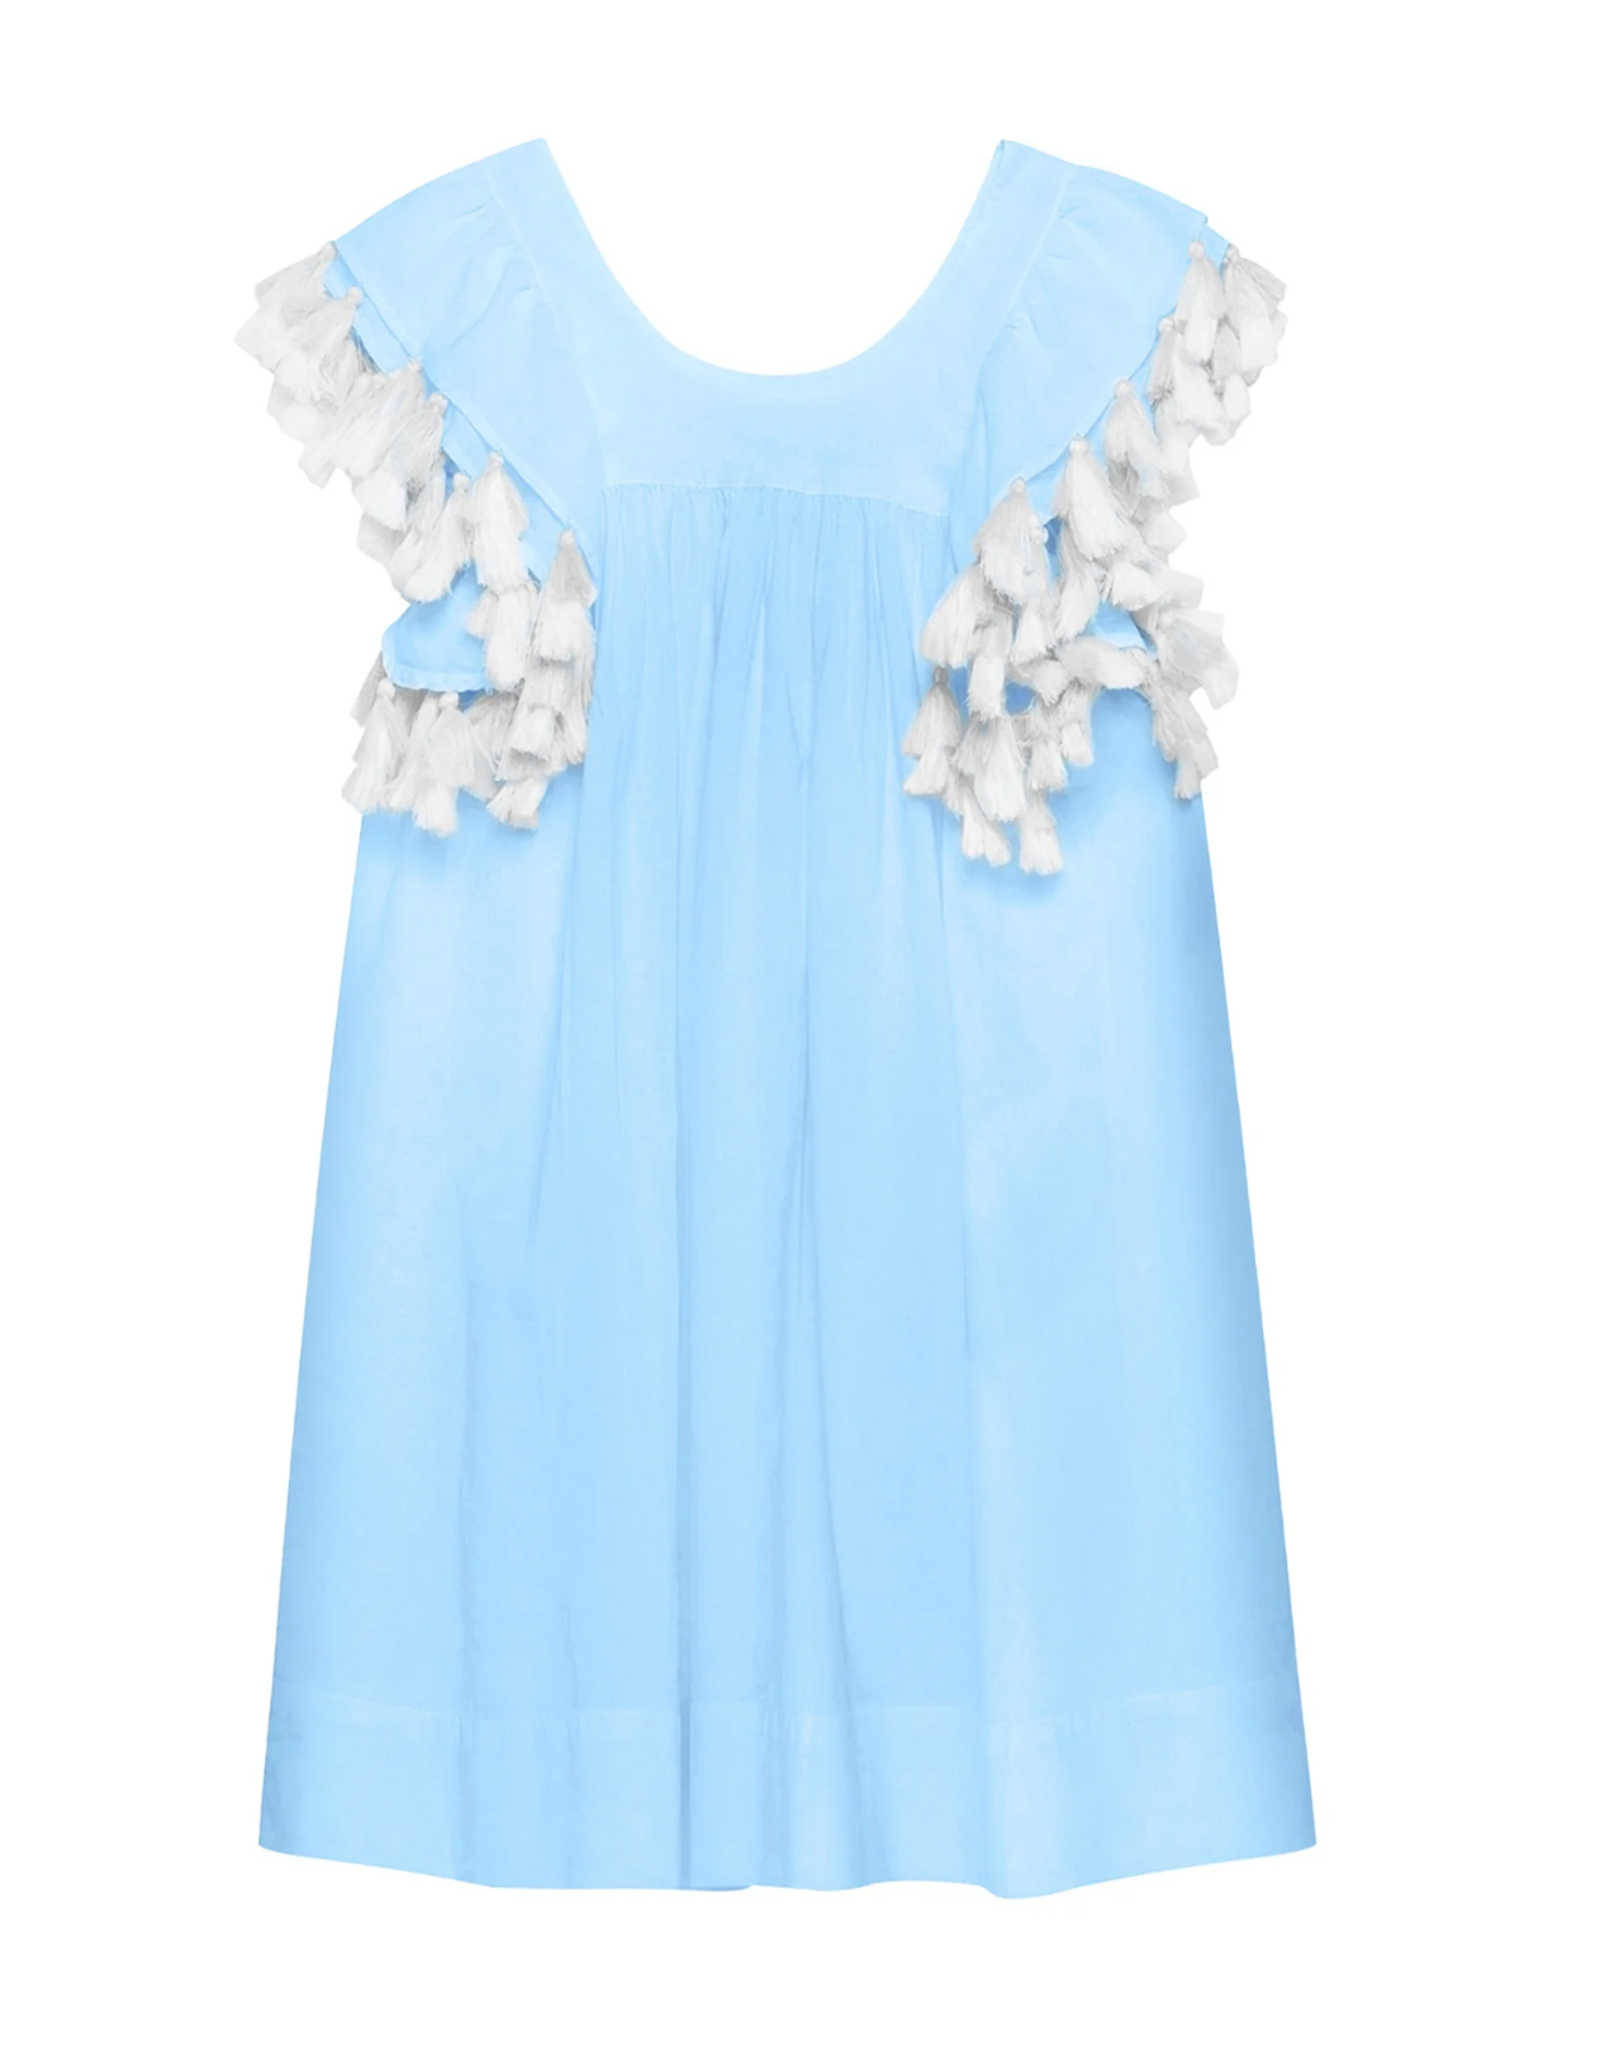 Stella Cove Blue Beach Dress with Tassels